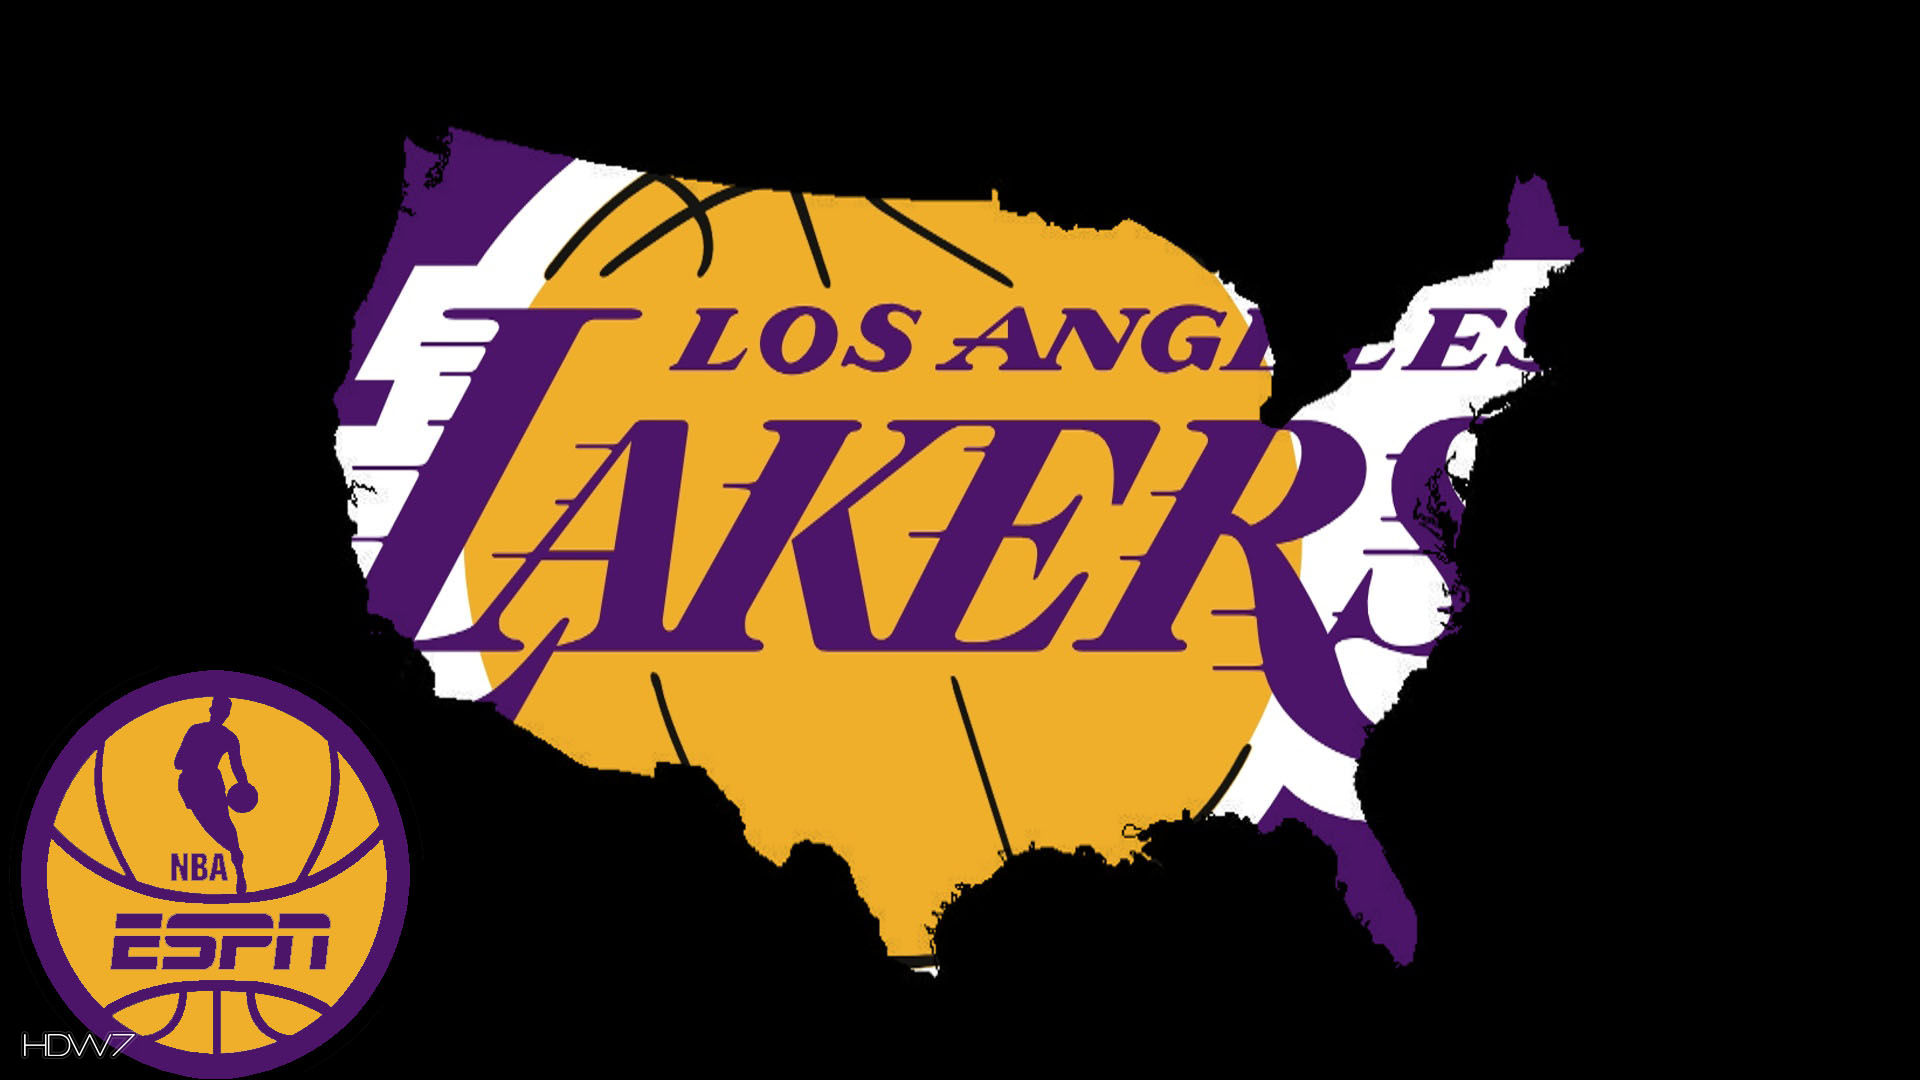 Wallpaper Name Nba Usa Los Angeles Lakers Jpg